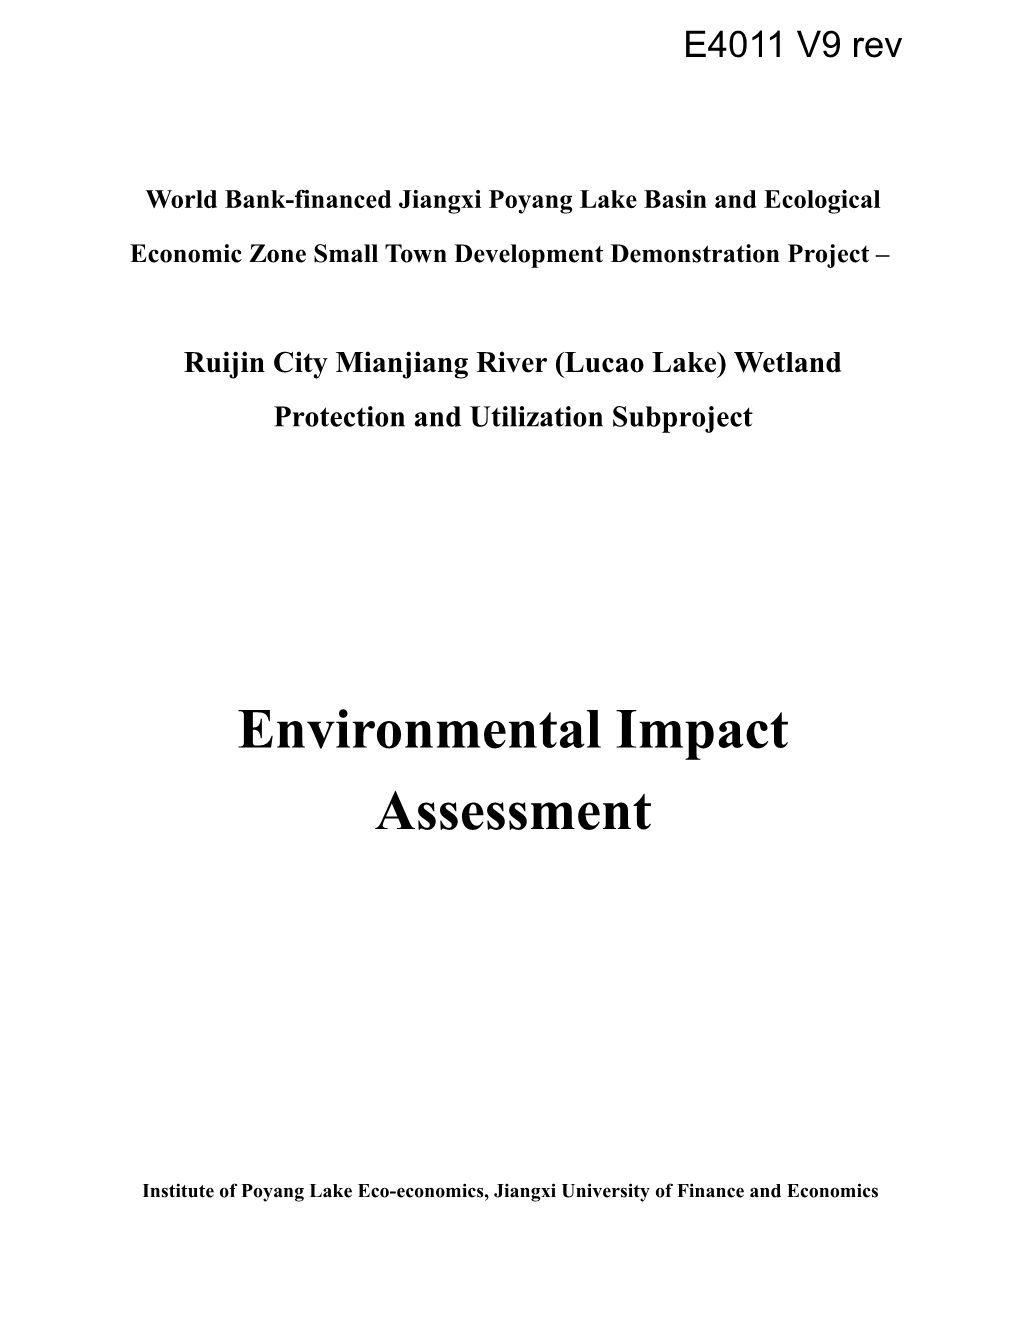 Ruijin City Mianjiang River (Lucao Lake) Wetland Protection and Utilization Subproject